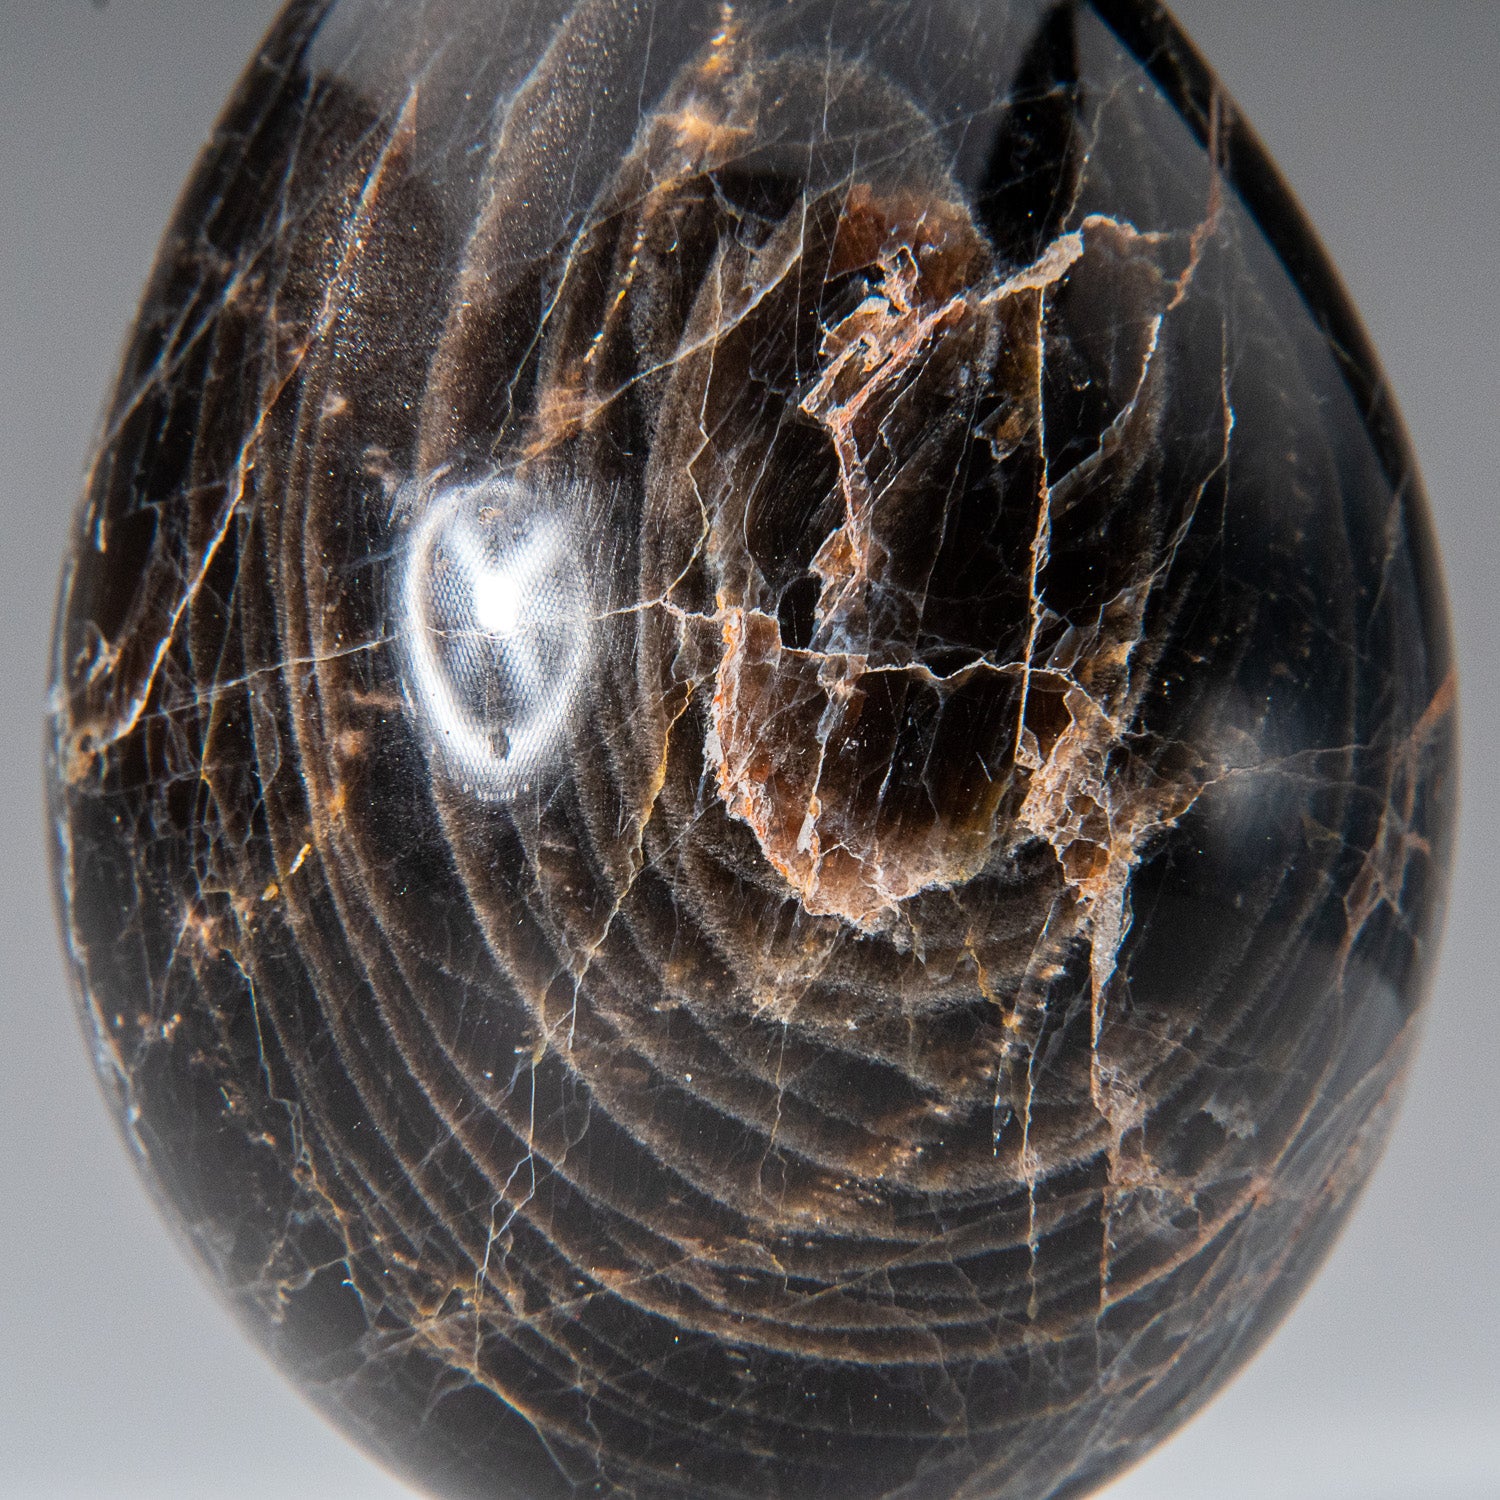 Genuine Polished Black Moonstone (2.25") Egg from Madagascar